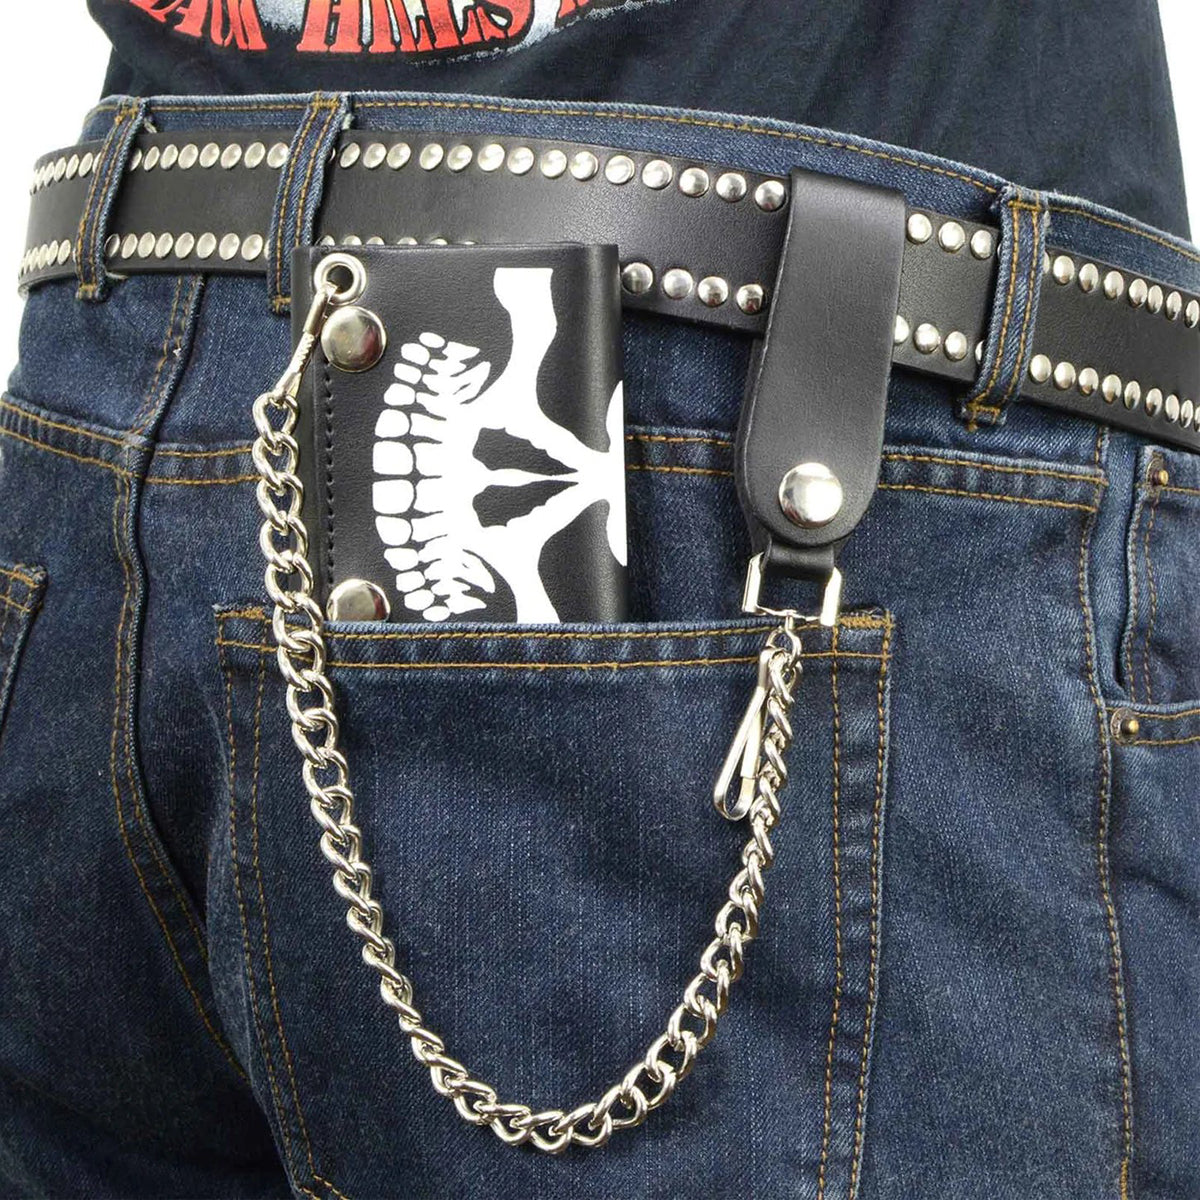 Men's 4” Leather “Skeleton Teeth” Tri-Fold Wallet w/ Anti-Theft Stainless Steel Chain